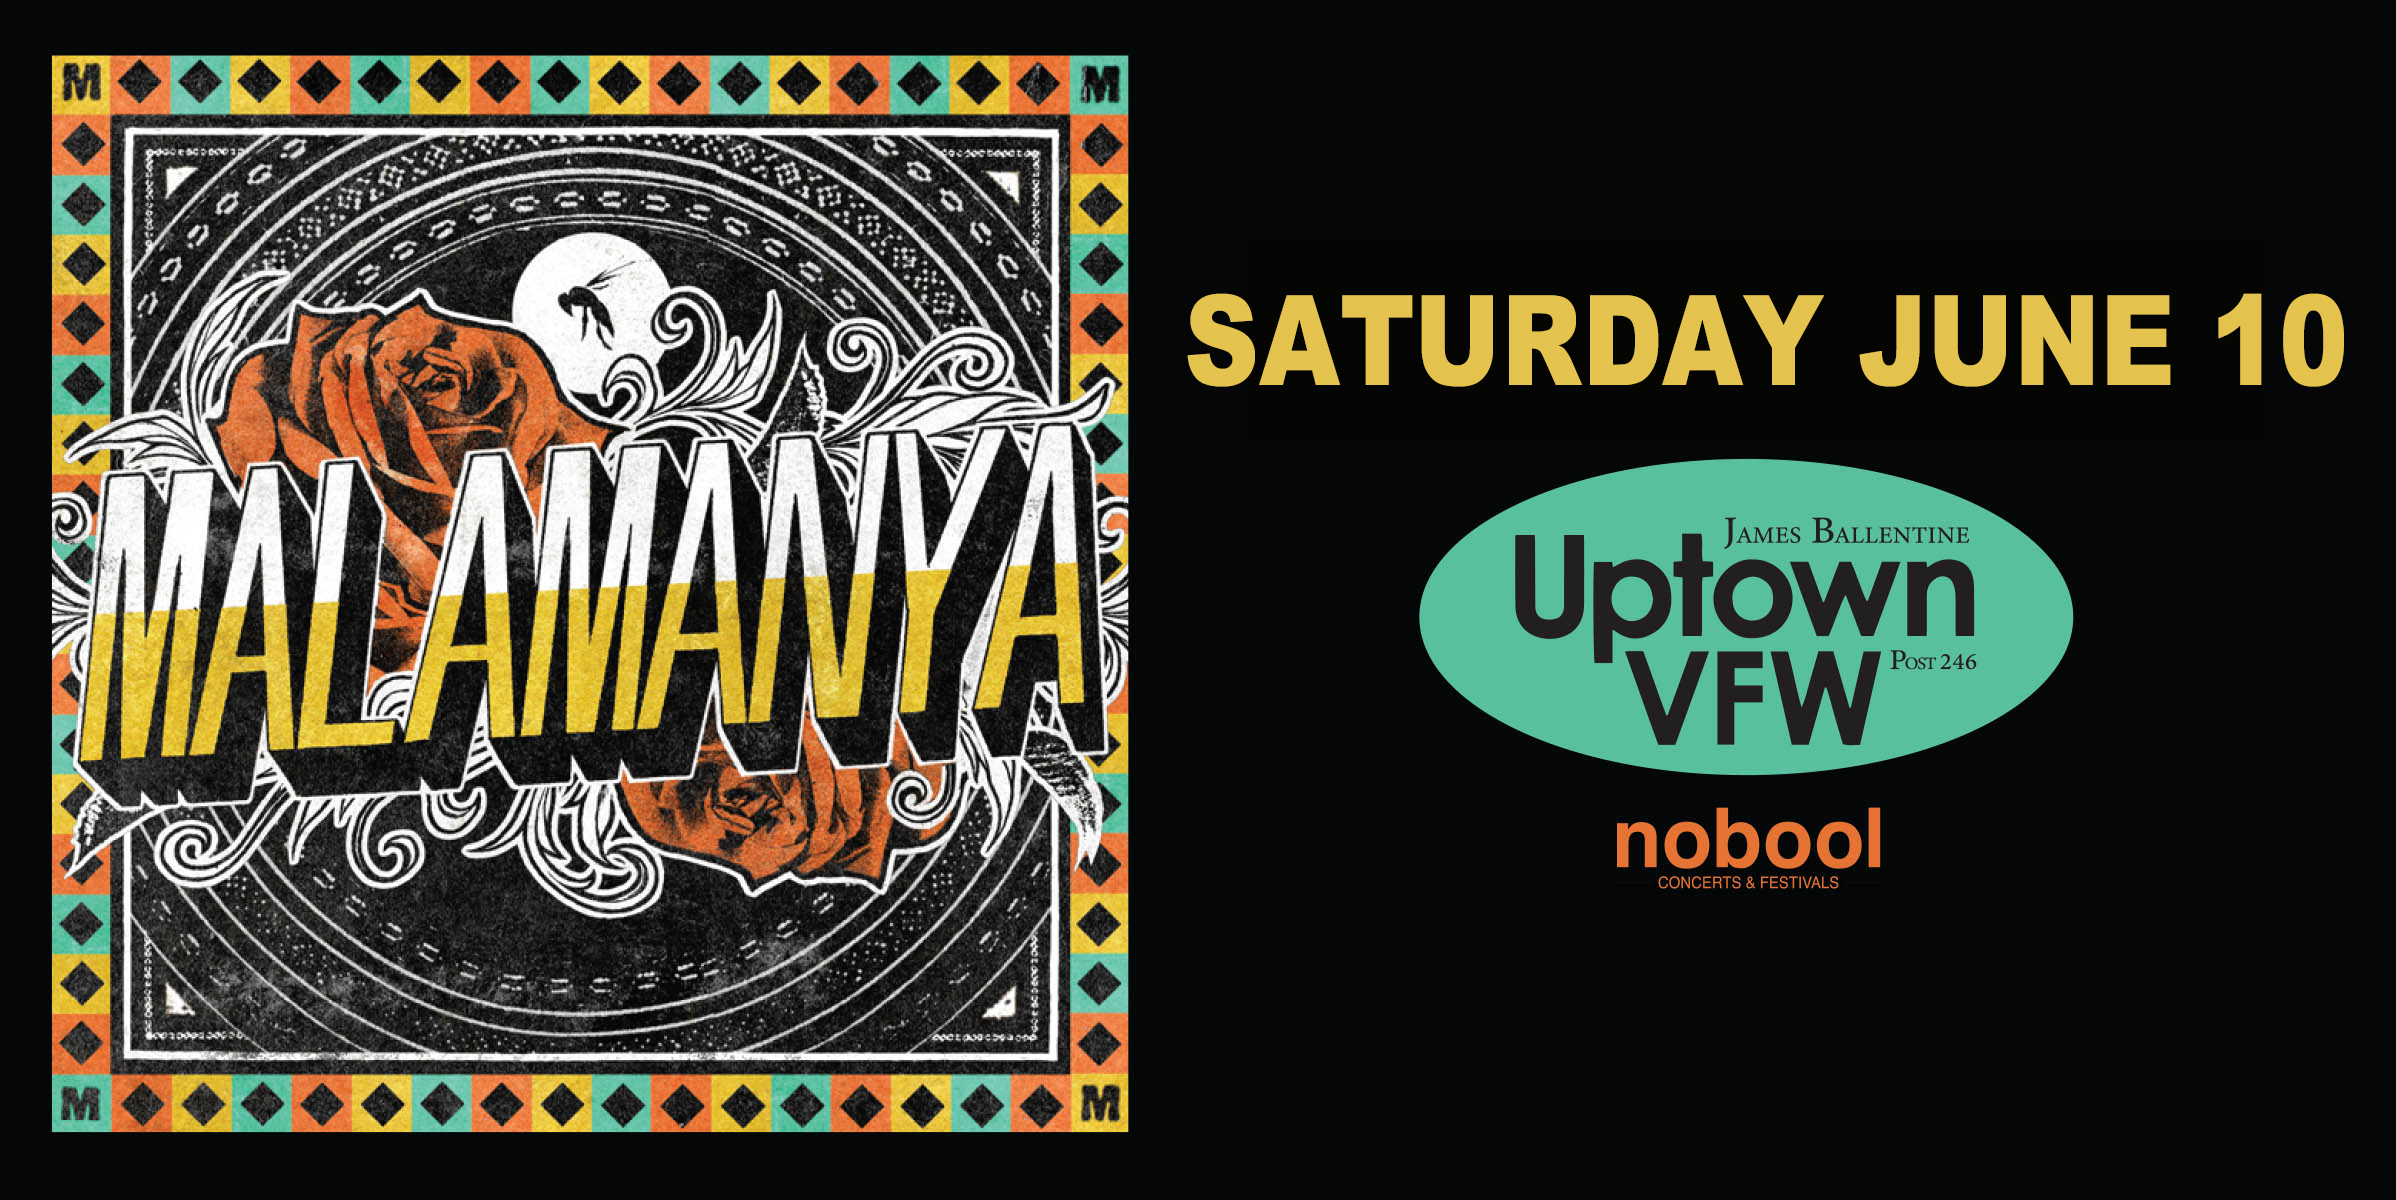 Malamanya Saturday, June 10 James Ballentine "Uptown" VFW Post 246 Doors 9:00pm :: Music 9:00pm :: 21+ GA $15 ADV / $20 DOS NO REFUNDS Tickets On-Sale Now